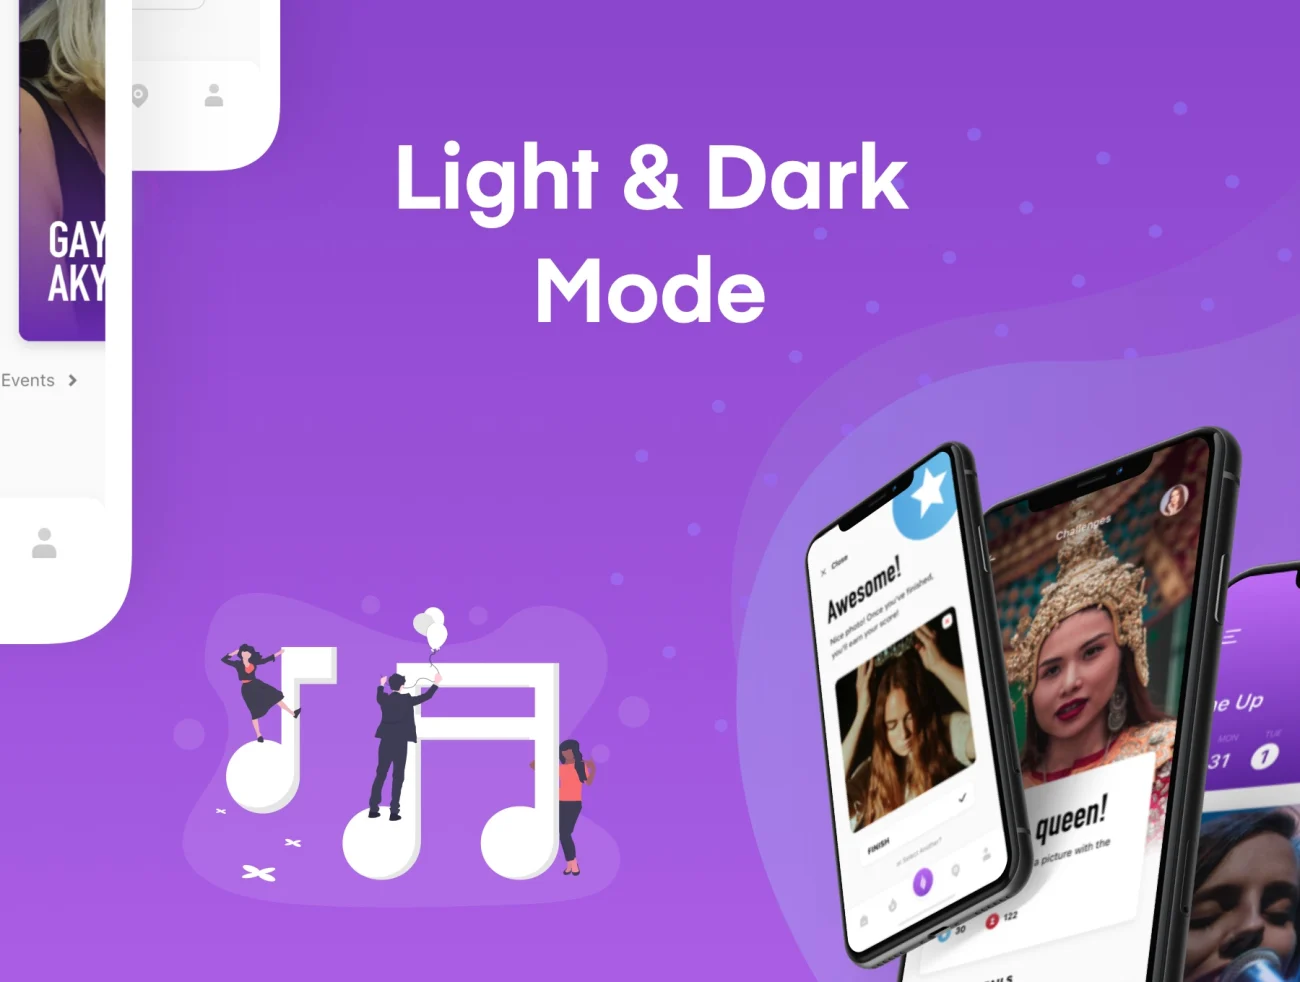 LineFest Music Festival Mobile App UI Kit XD 音乐节以及日程应用套装-UI/UX、ui套件、卡片式、应用、播放器、日历、预订-到位啦UI